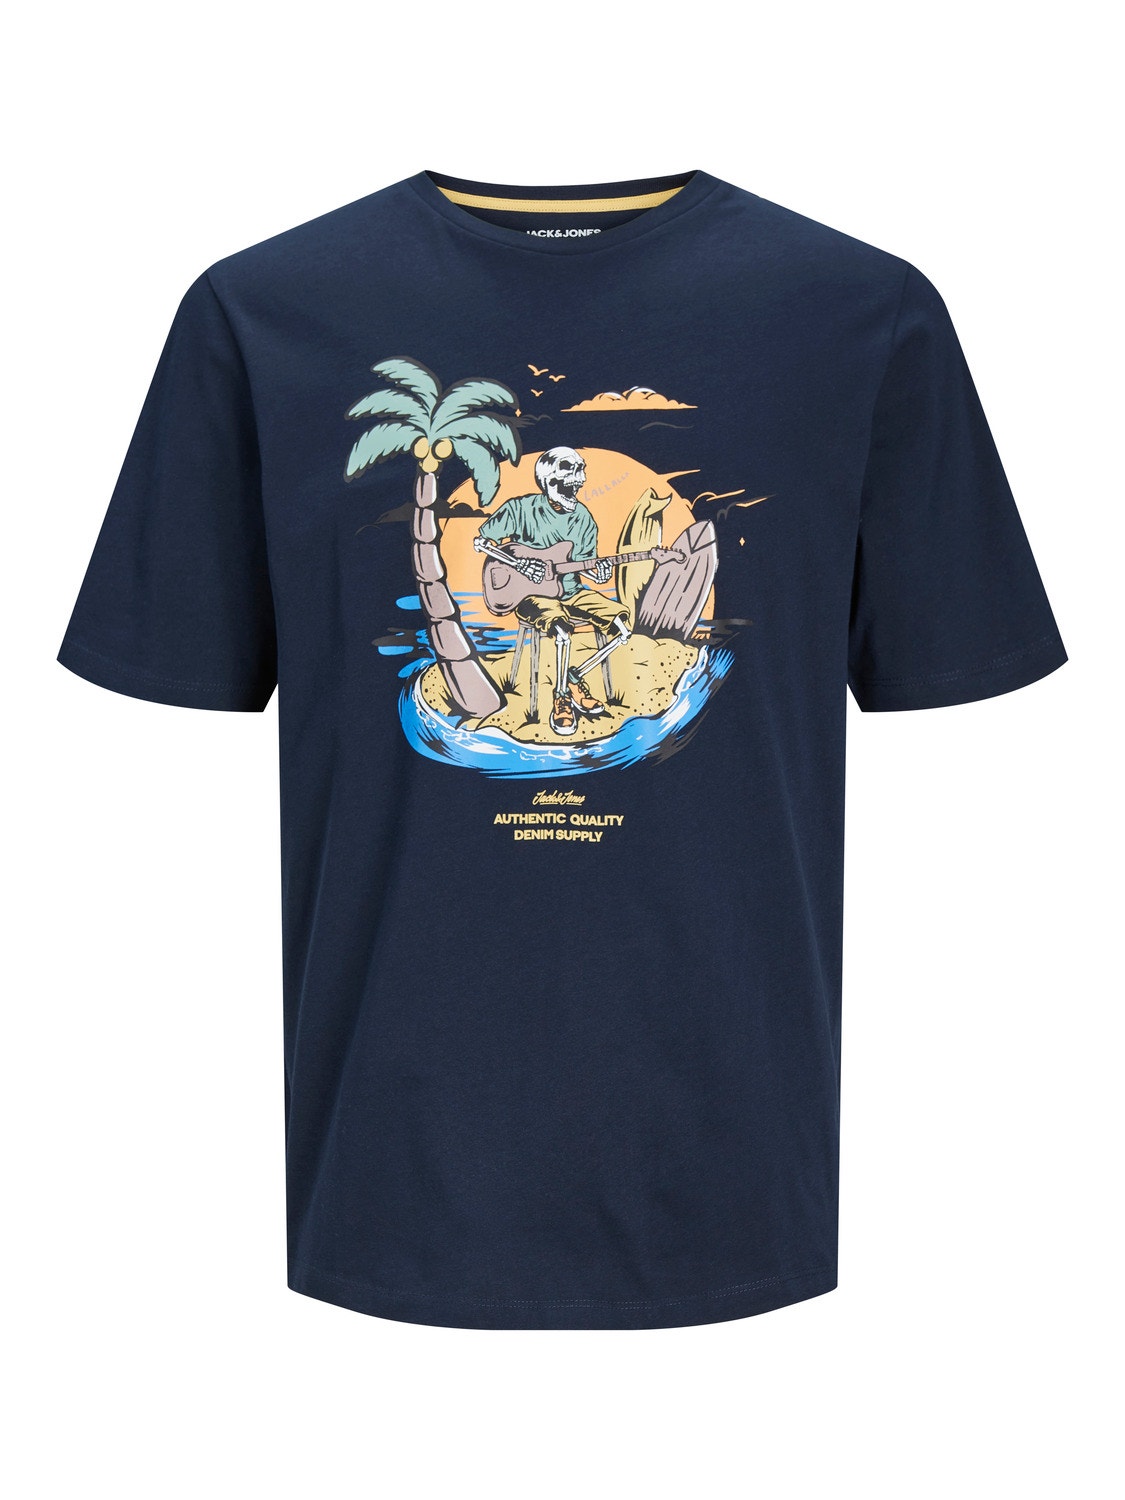 Jack & Jones Plus Size T-shirt Estampar -Navy Blazer - 12254909